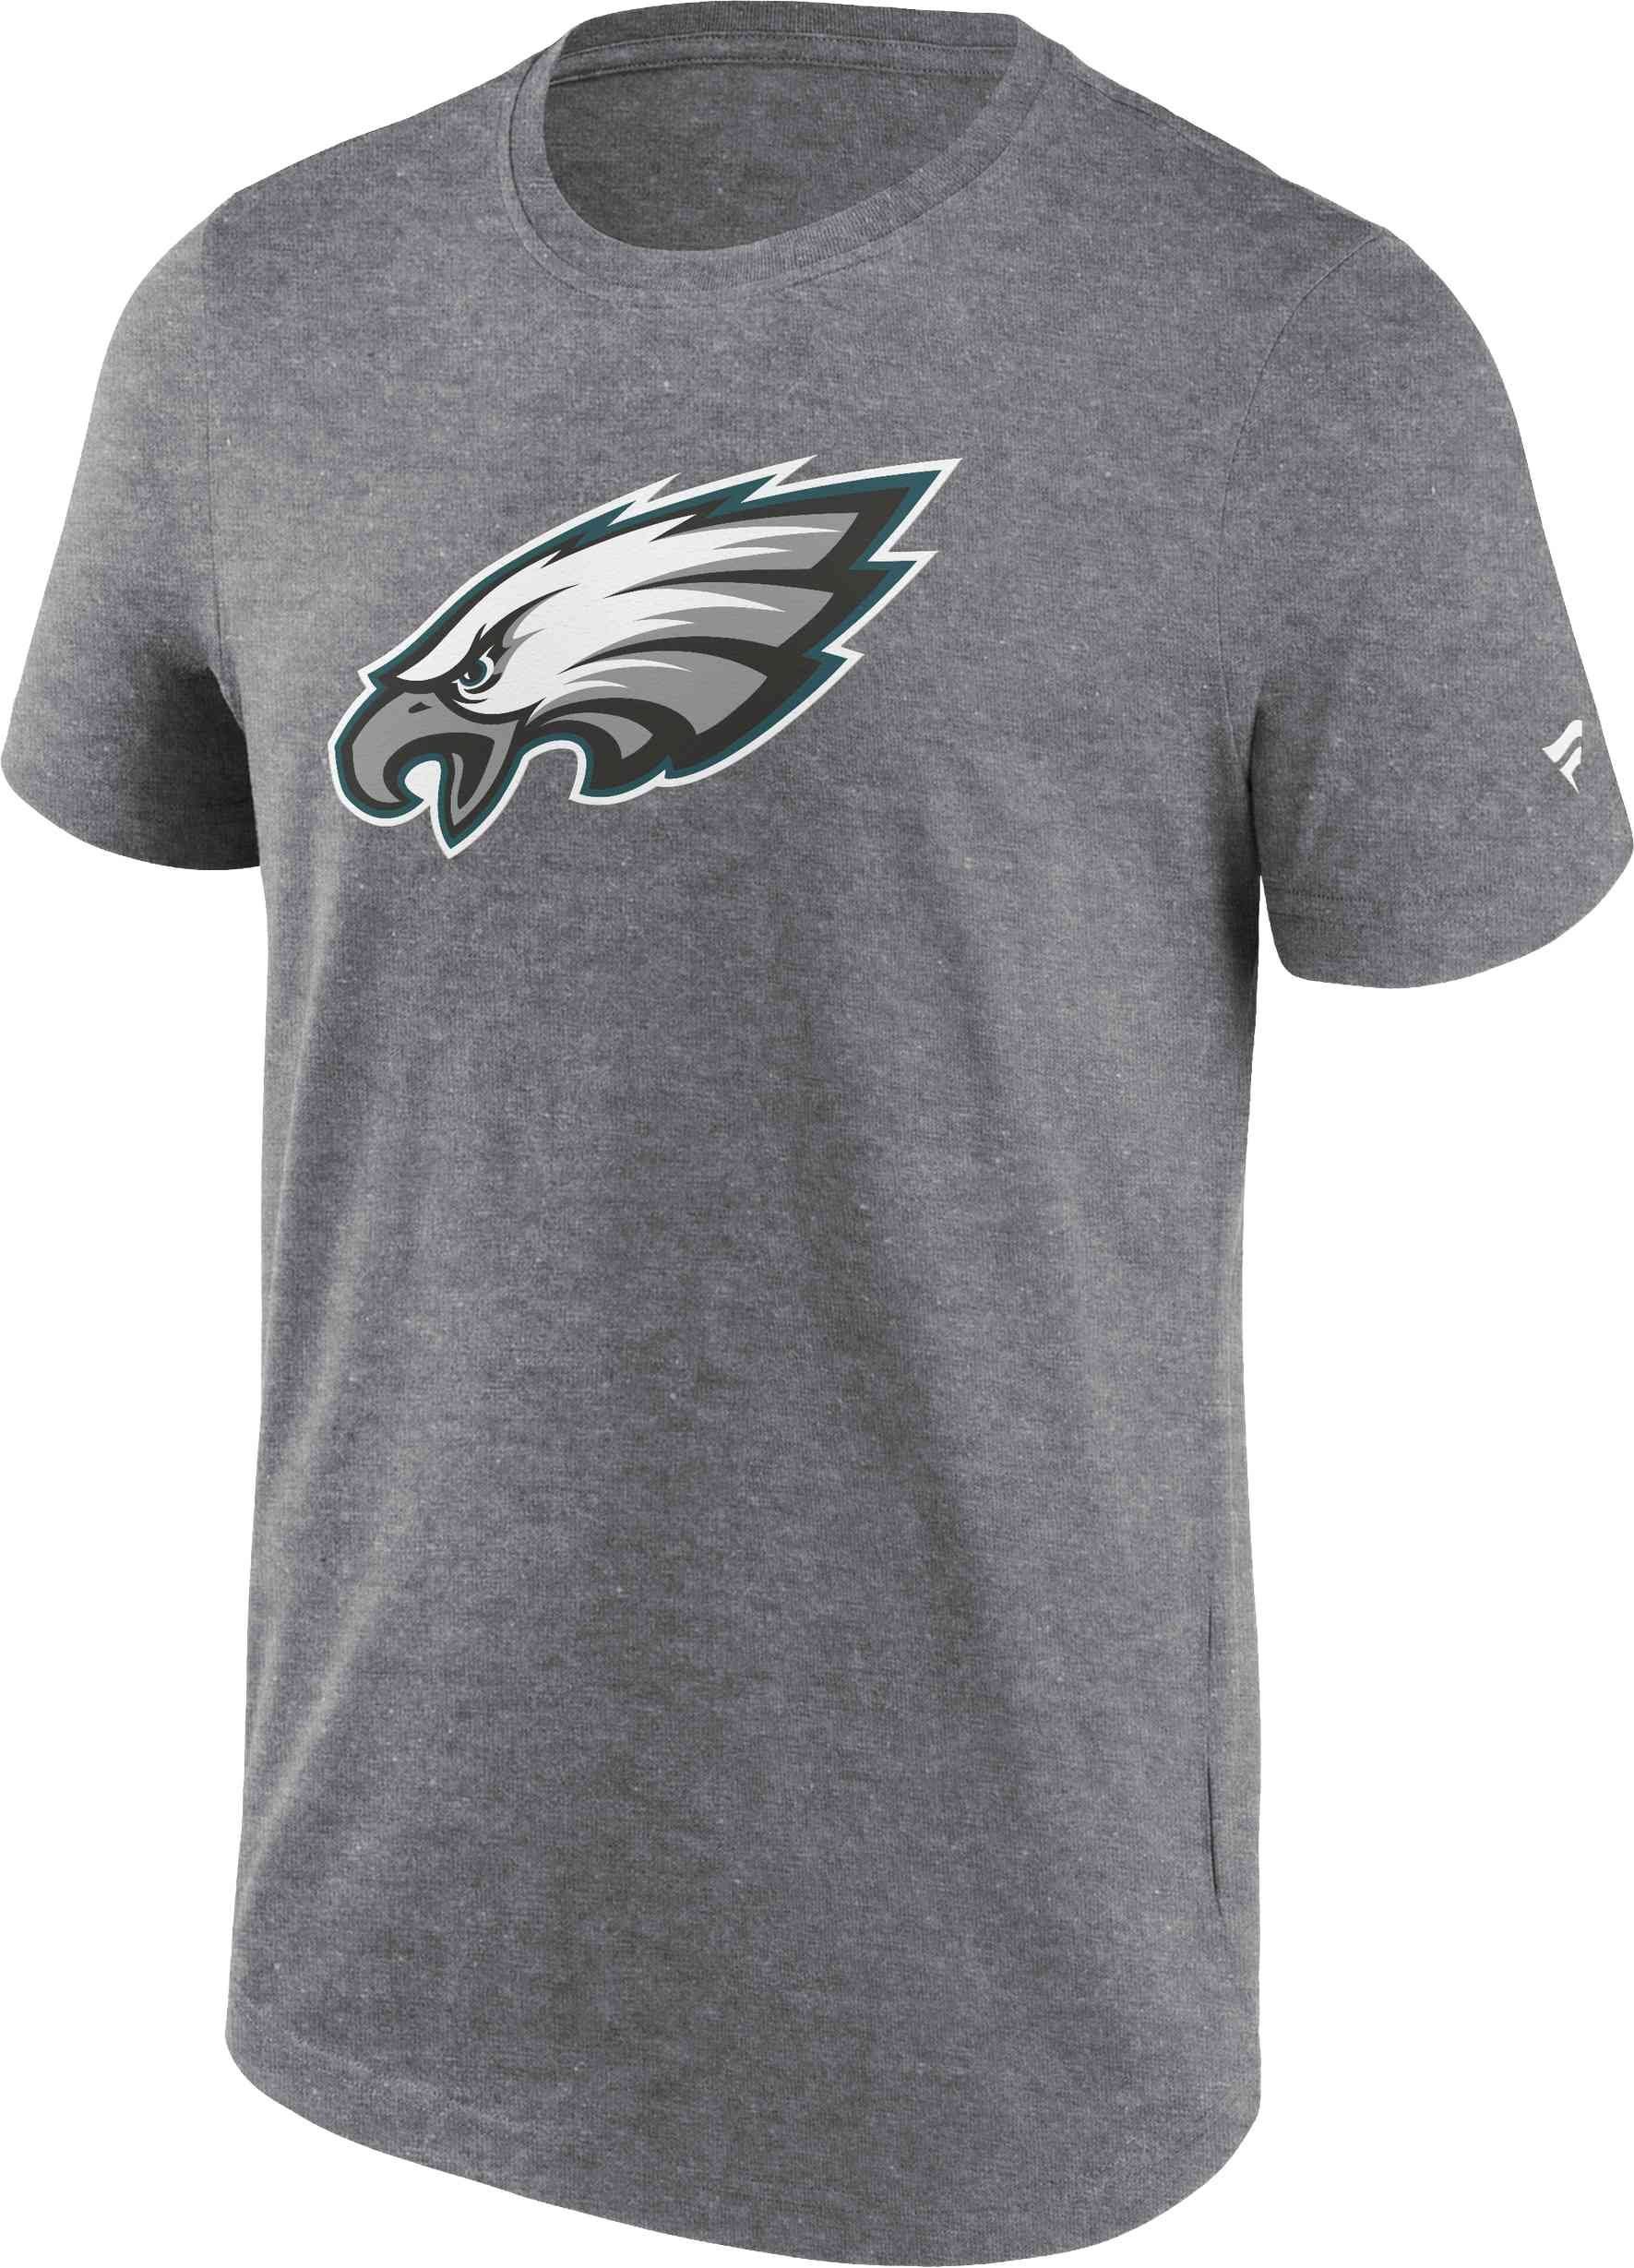 Fanatics T-Shirt NFL Philadelphia Eagles Primary Logo Graphic